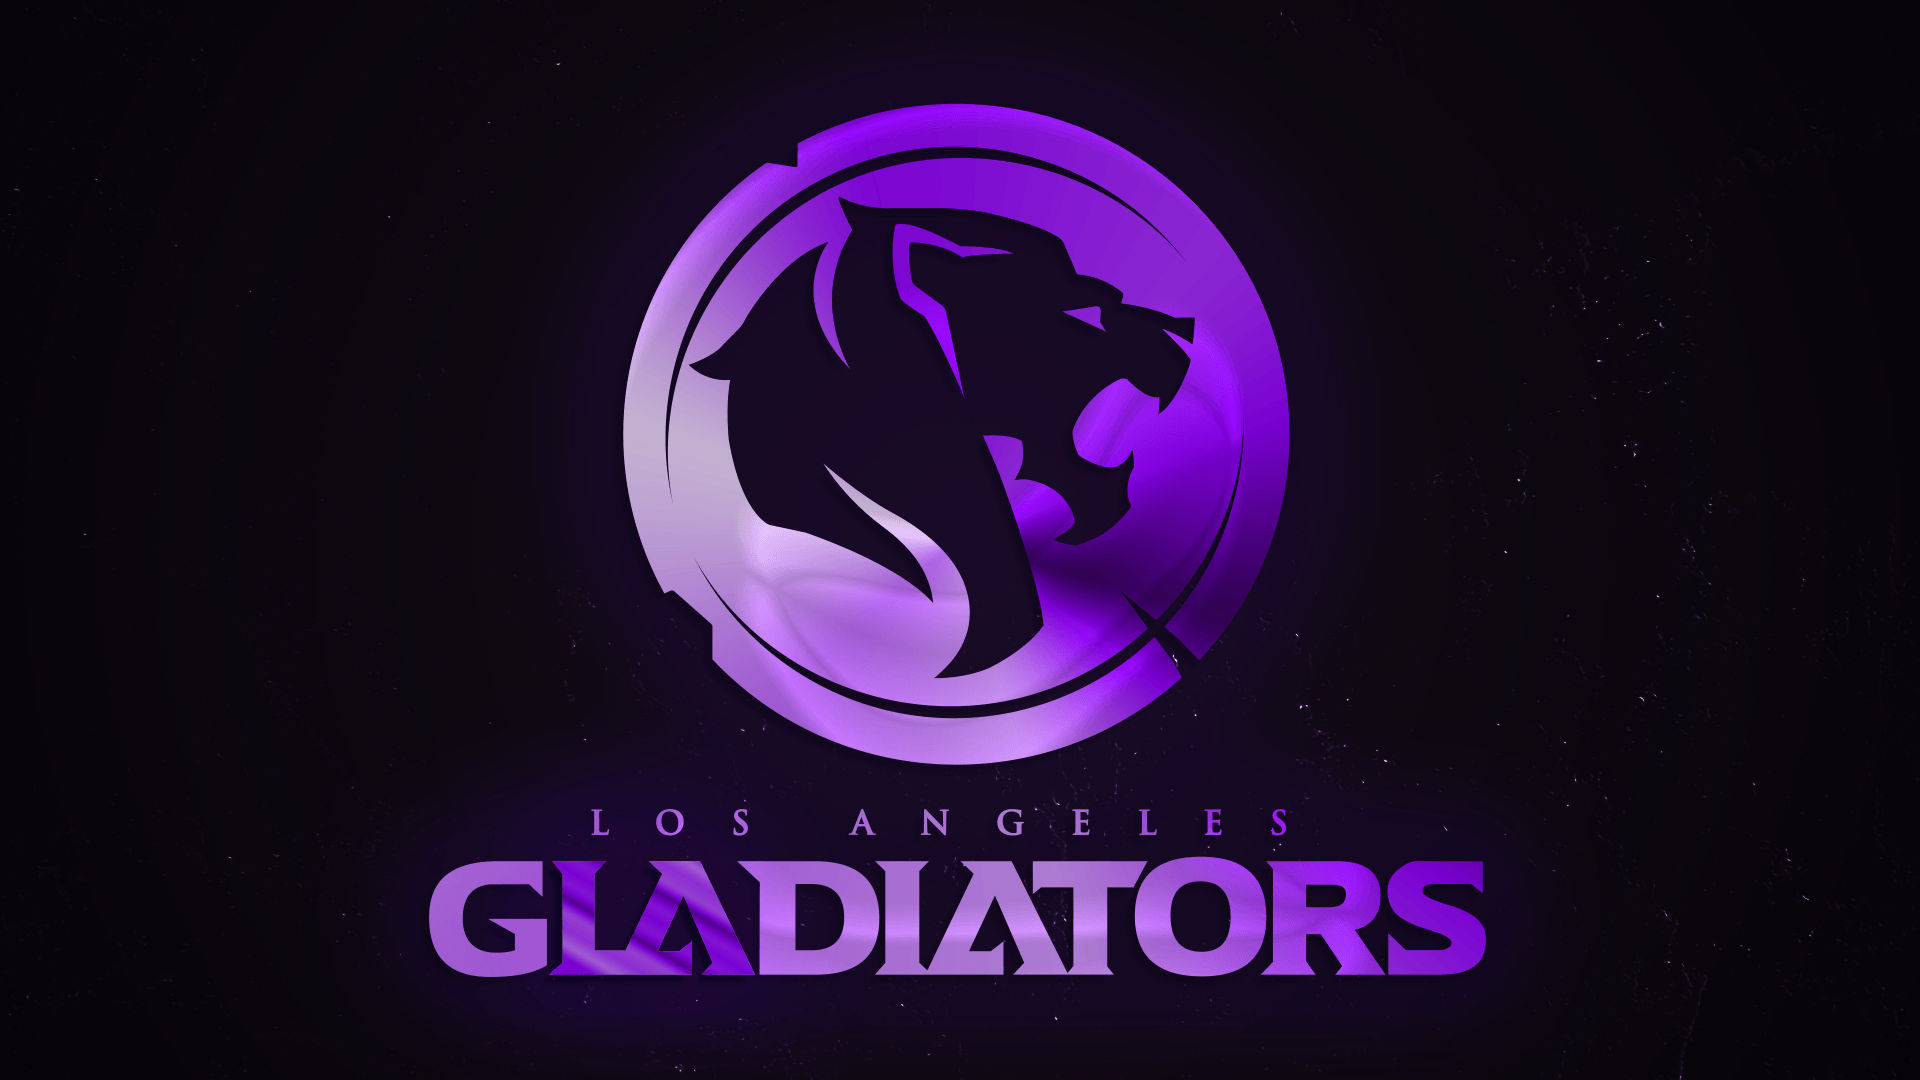 LA Gladiators HD Wallpaper and Background Image